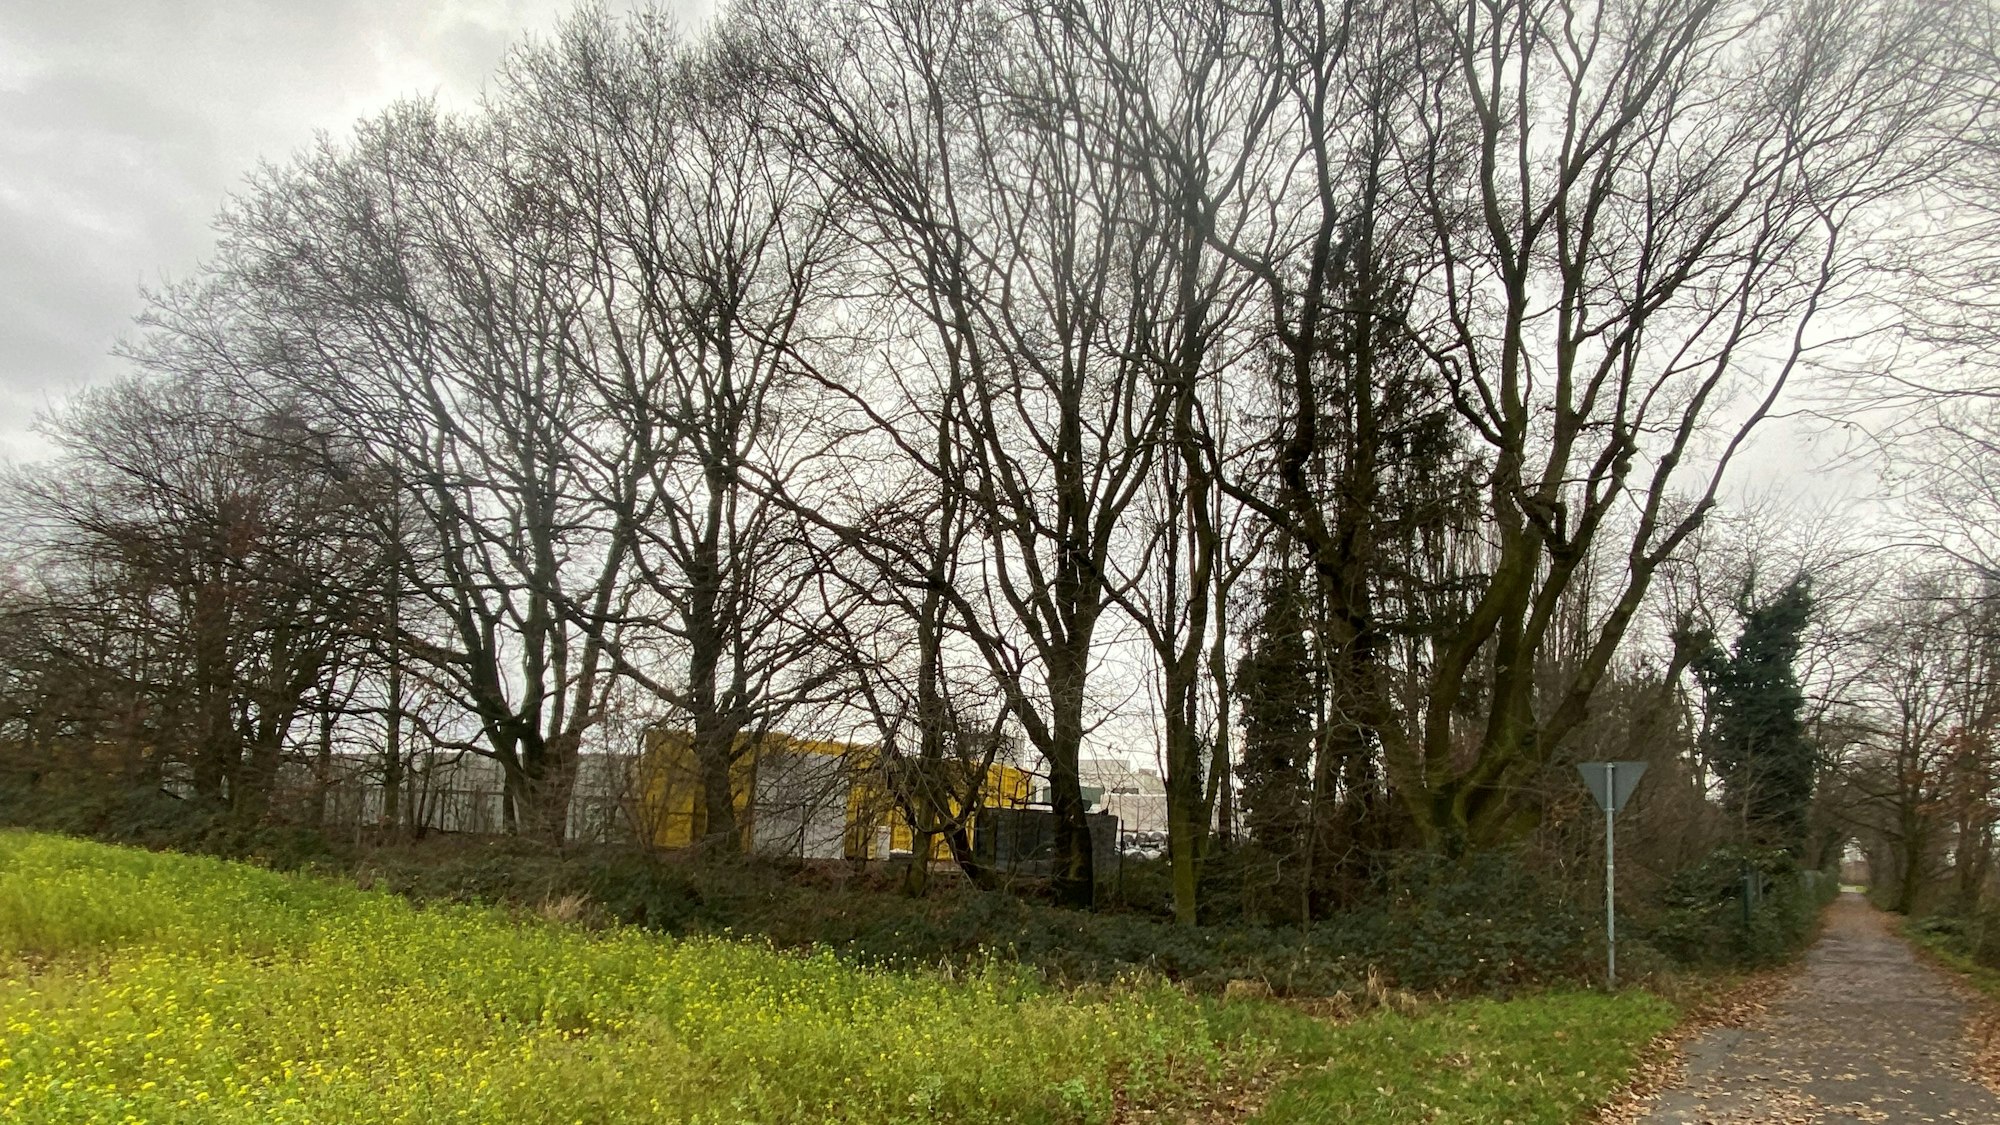 Hinter Bäume steht ein Fabrikgebäude.